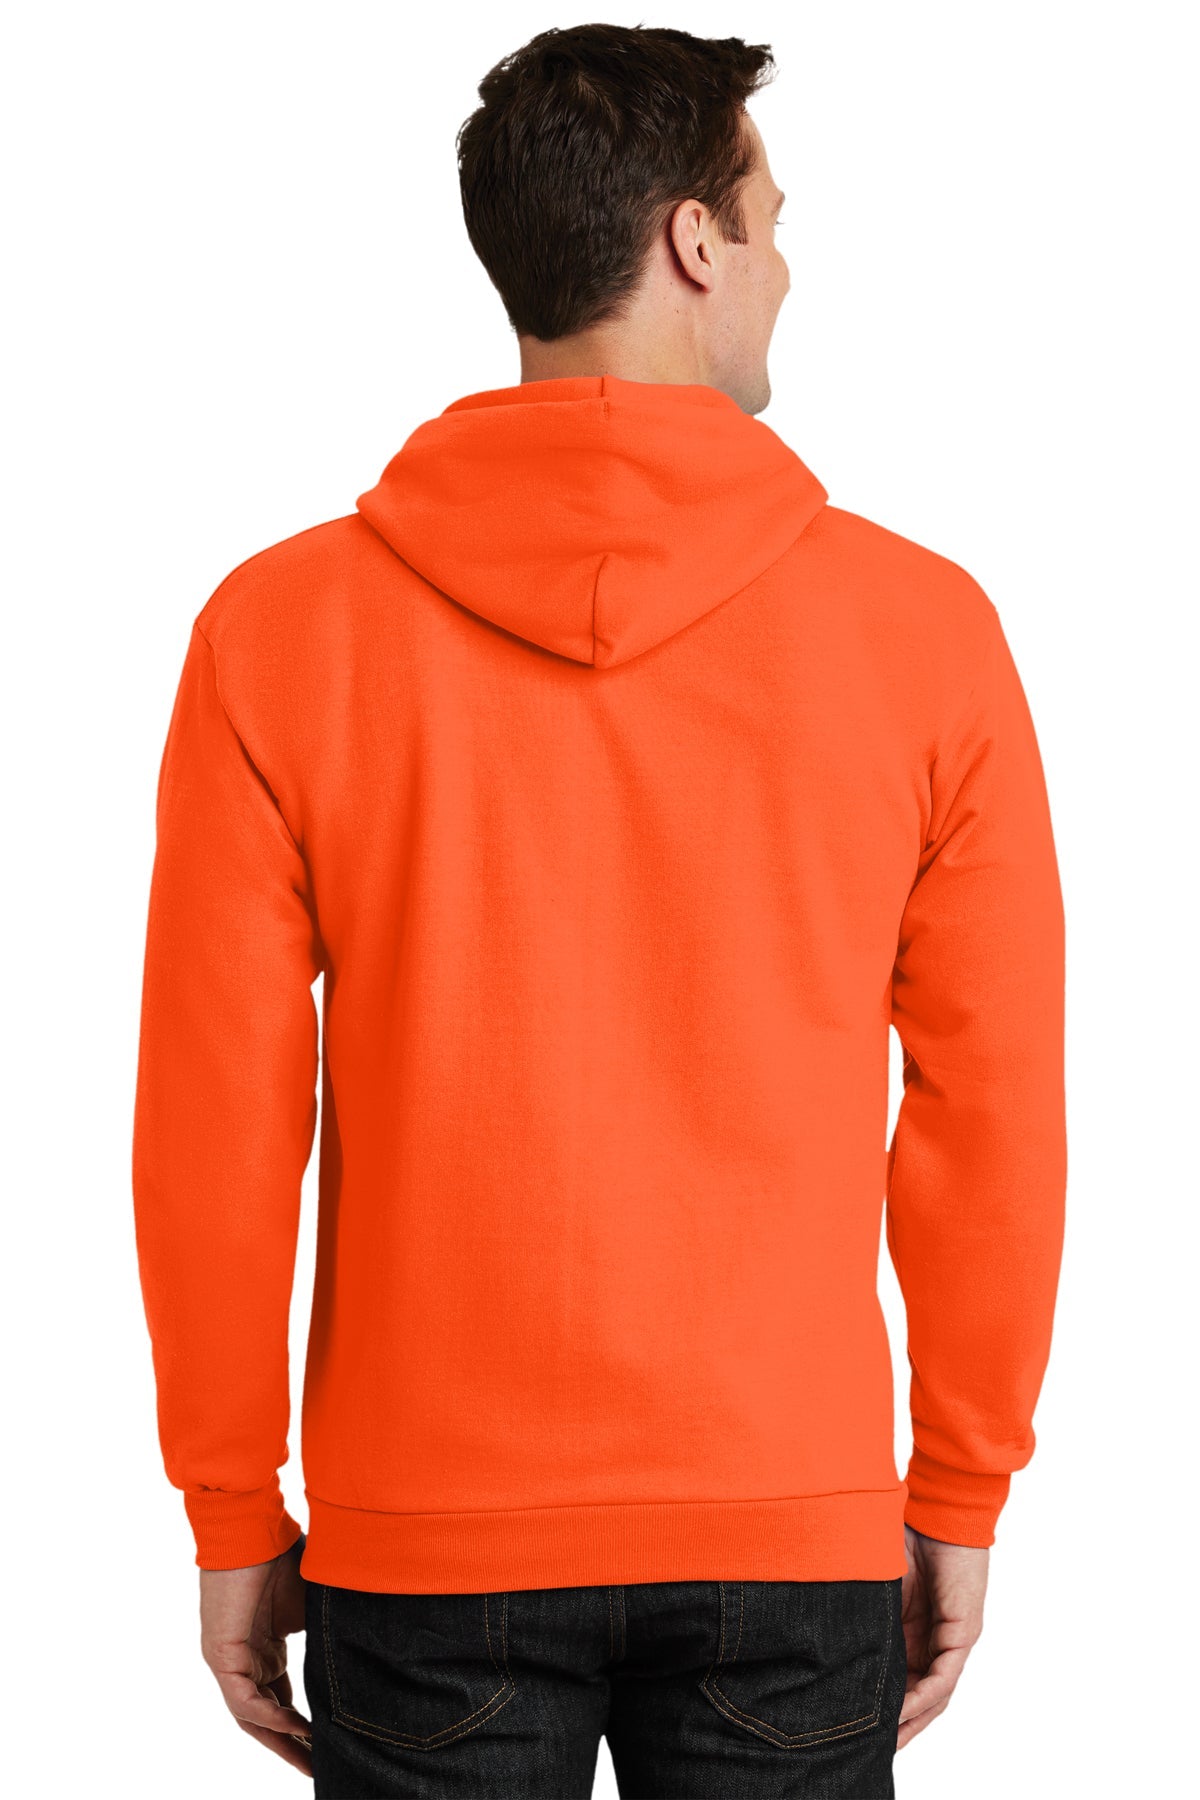 Port & Company Tall Essential Fleece Zip Custom Hoodies, Safety Orange